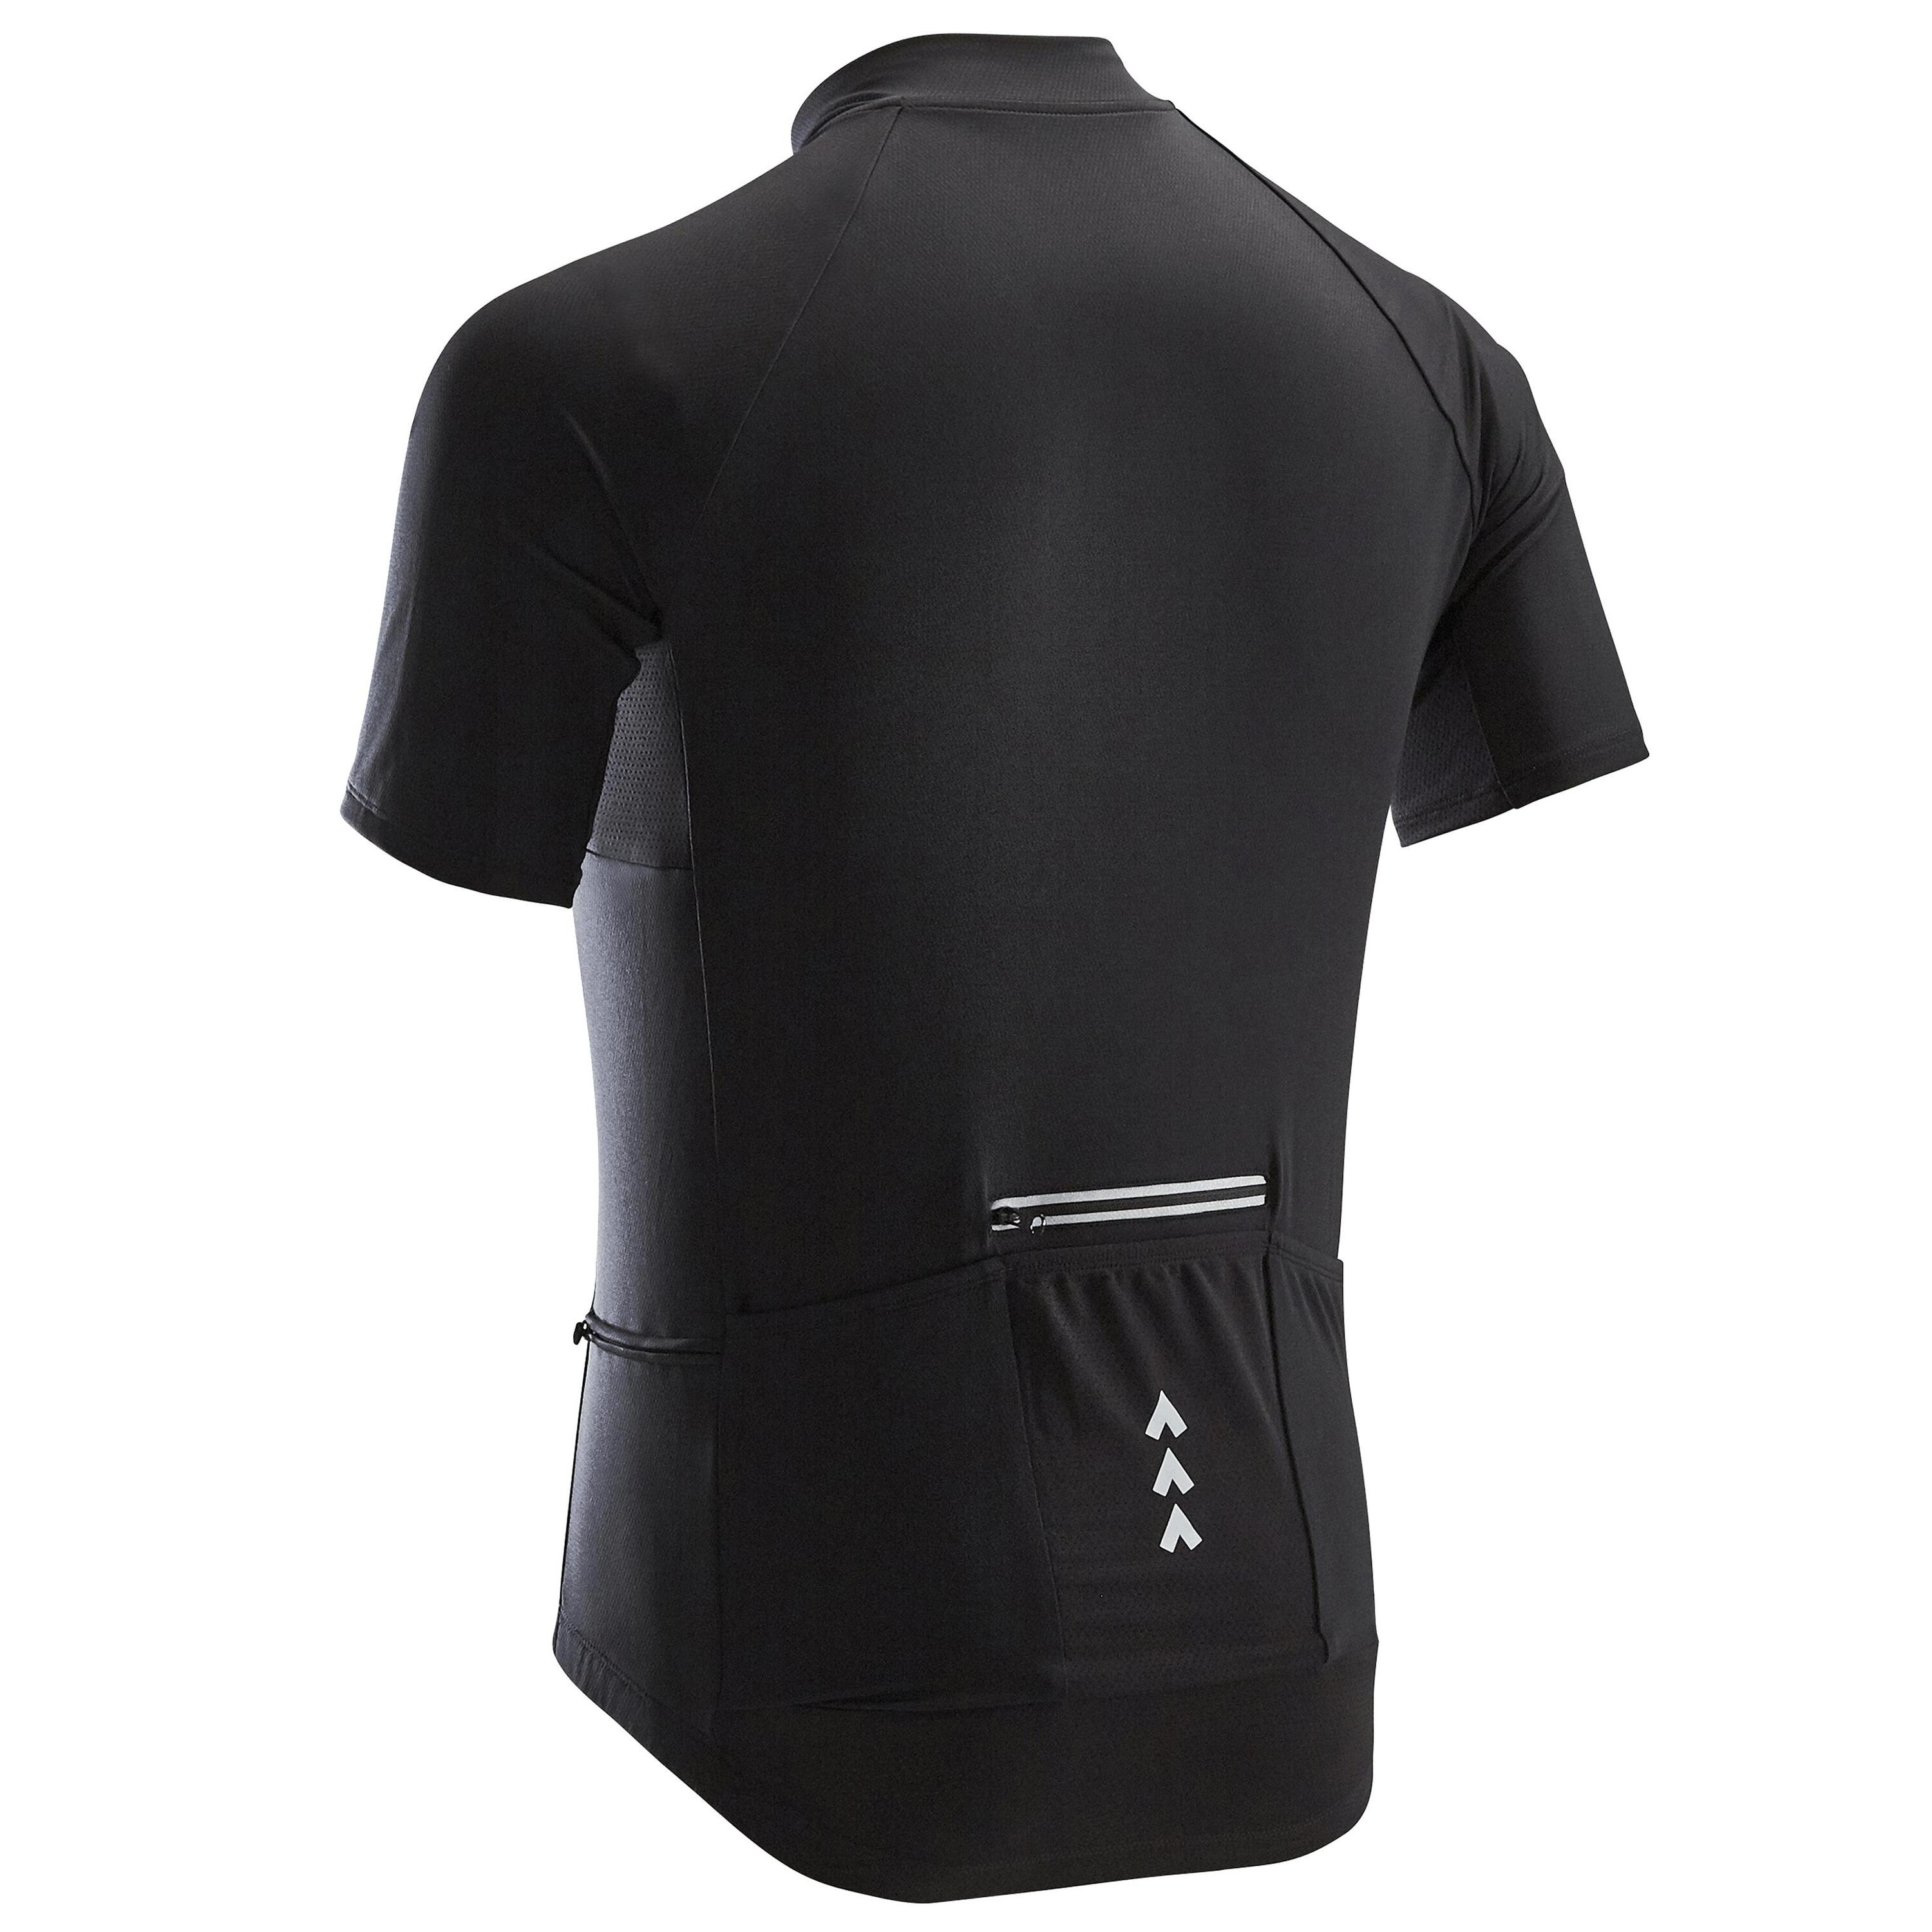 Men's Short-Sleeved Summer Cycling Jersey RC100 - Black 2/12